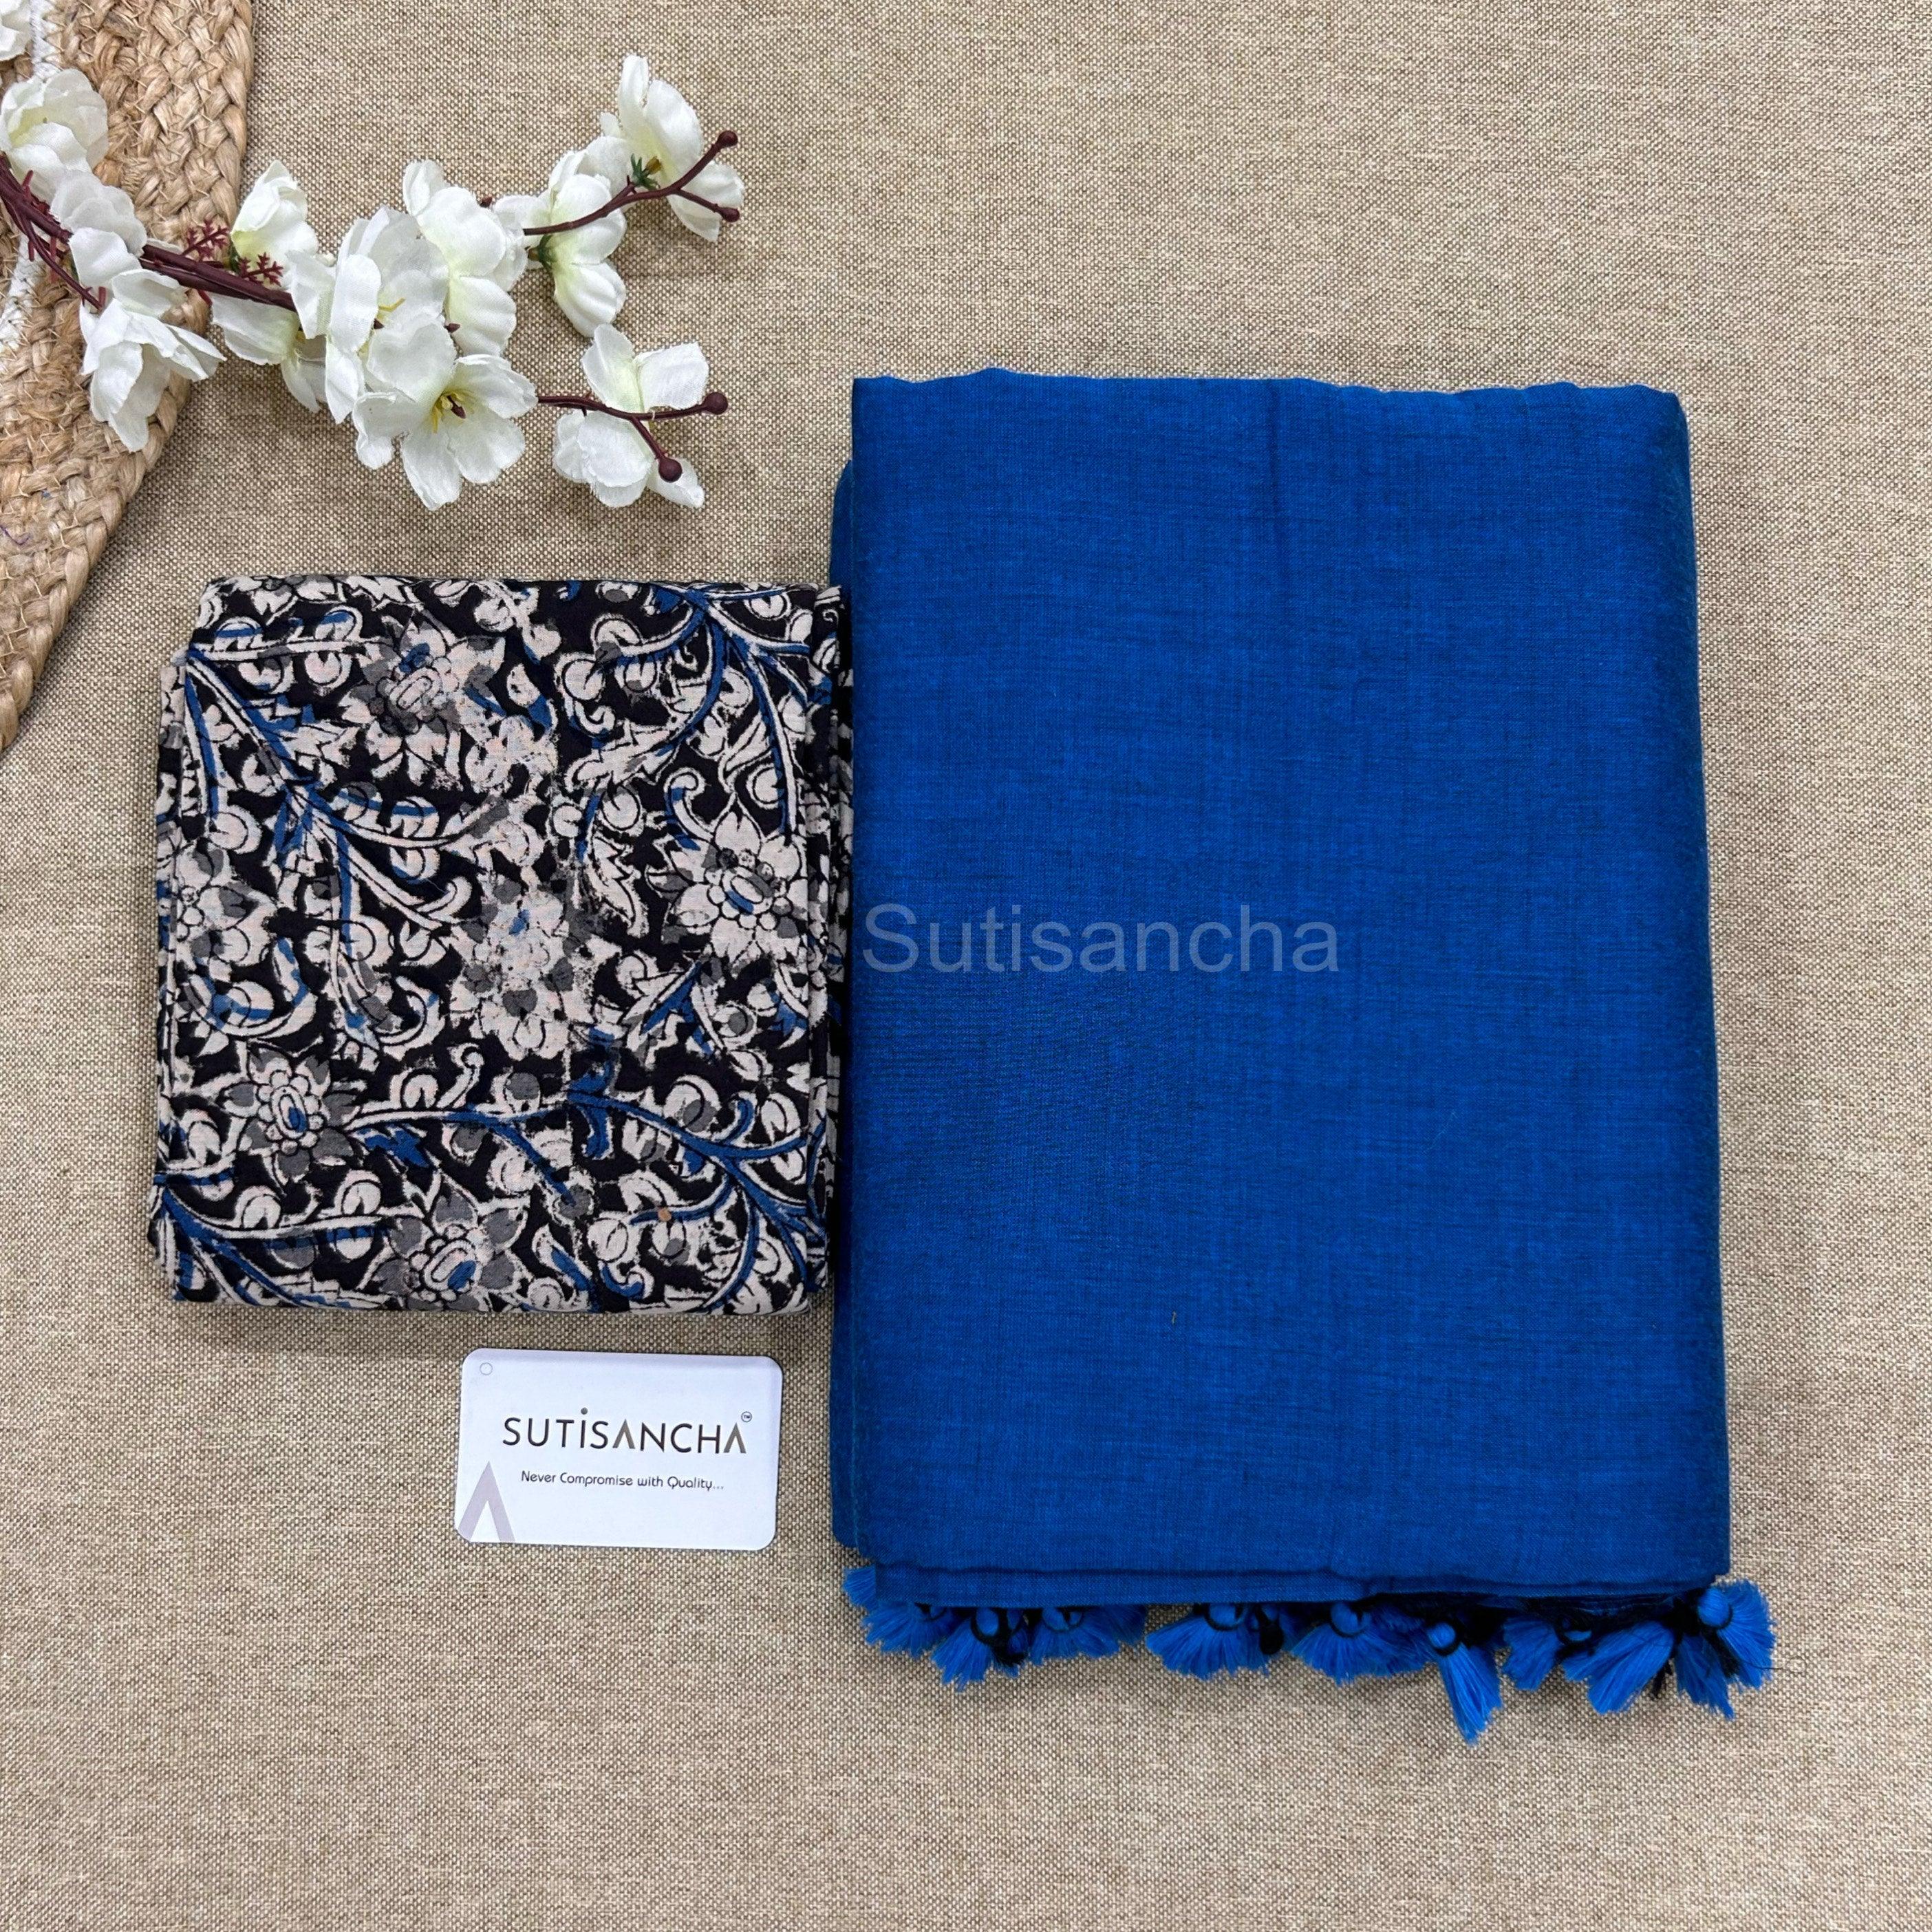 Sutisancha Indigoblue Khadi Saree & Cotton Design Blouse - Suti Sancha